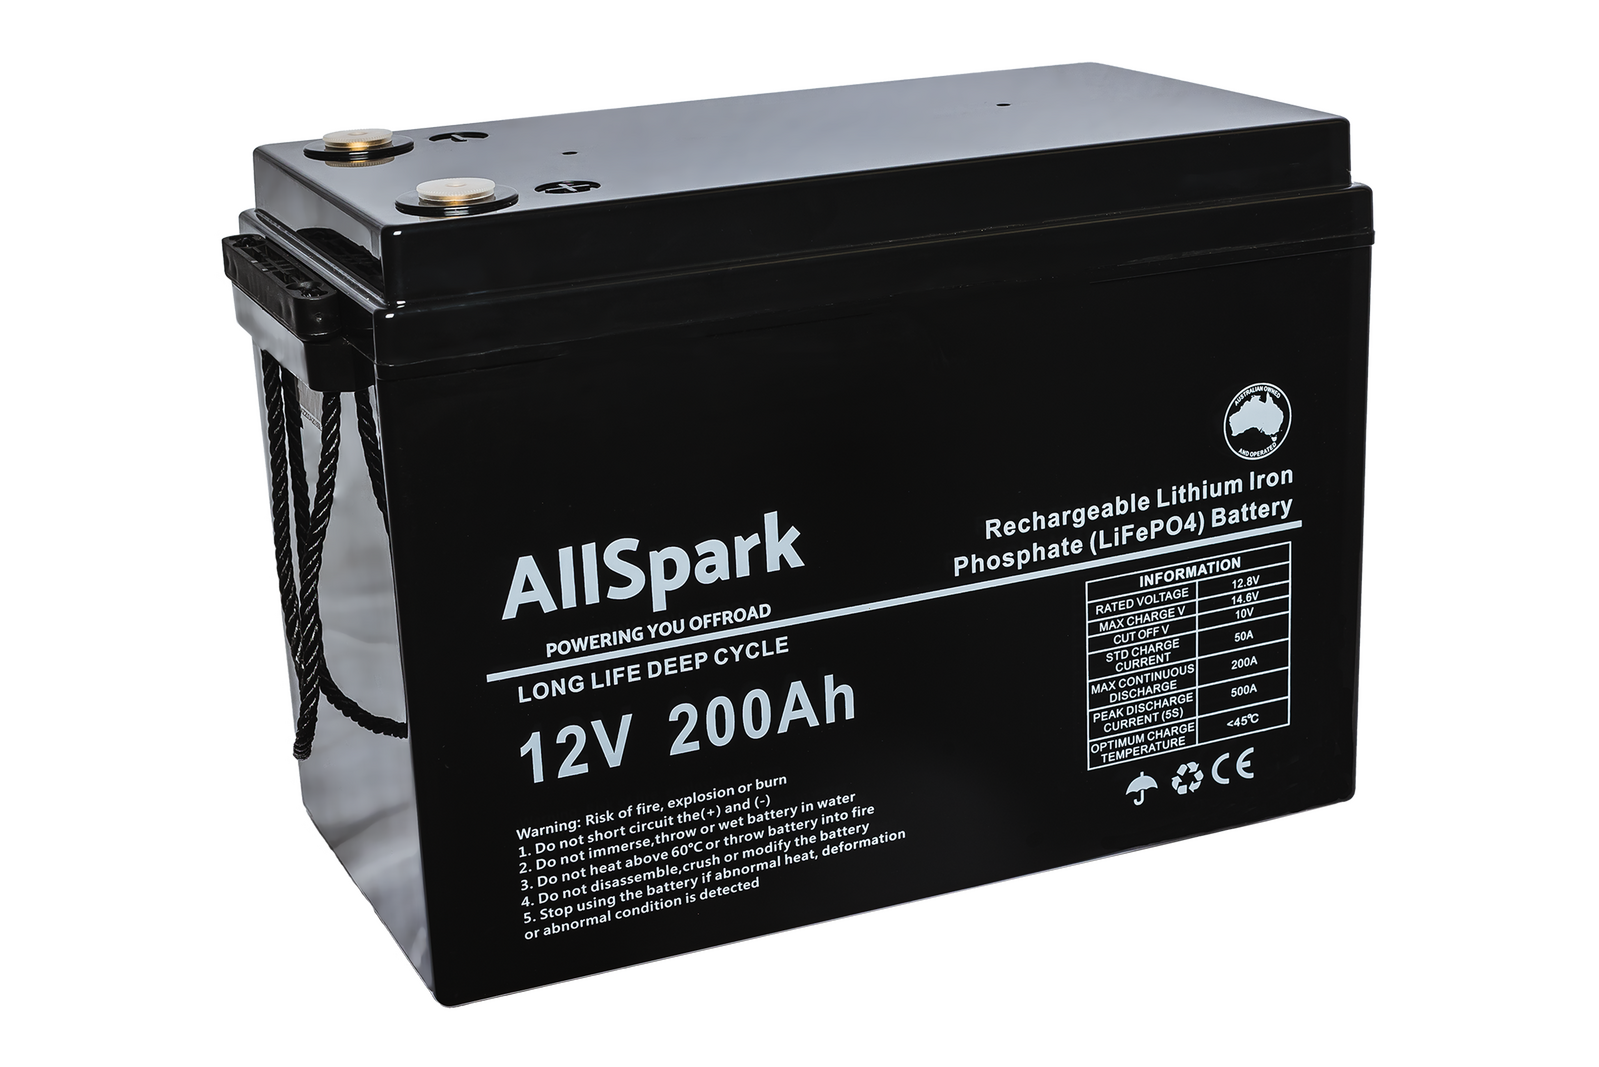 AllSpark 12V 200ah High Performance Lithium Battery (ABS CASE) Generation 2